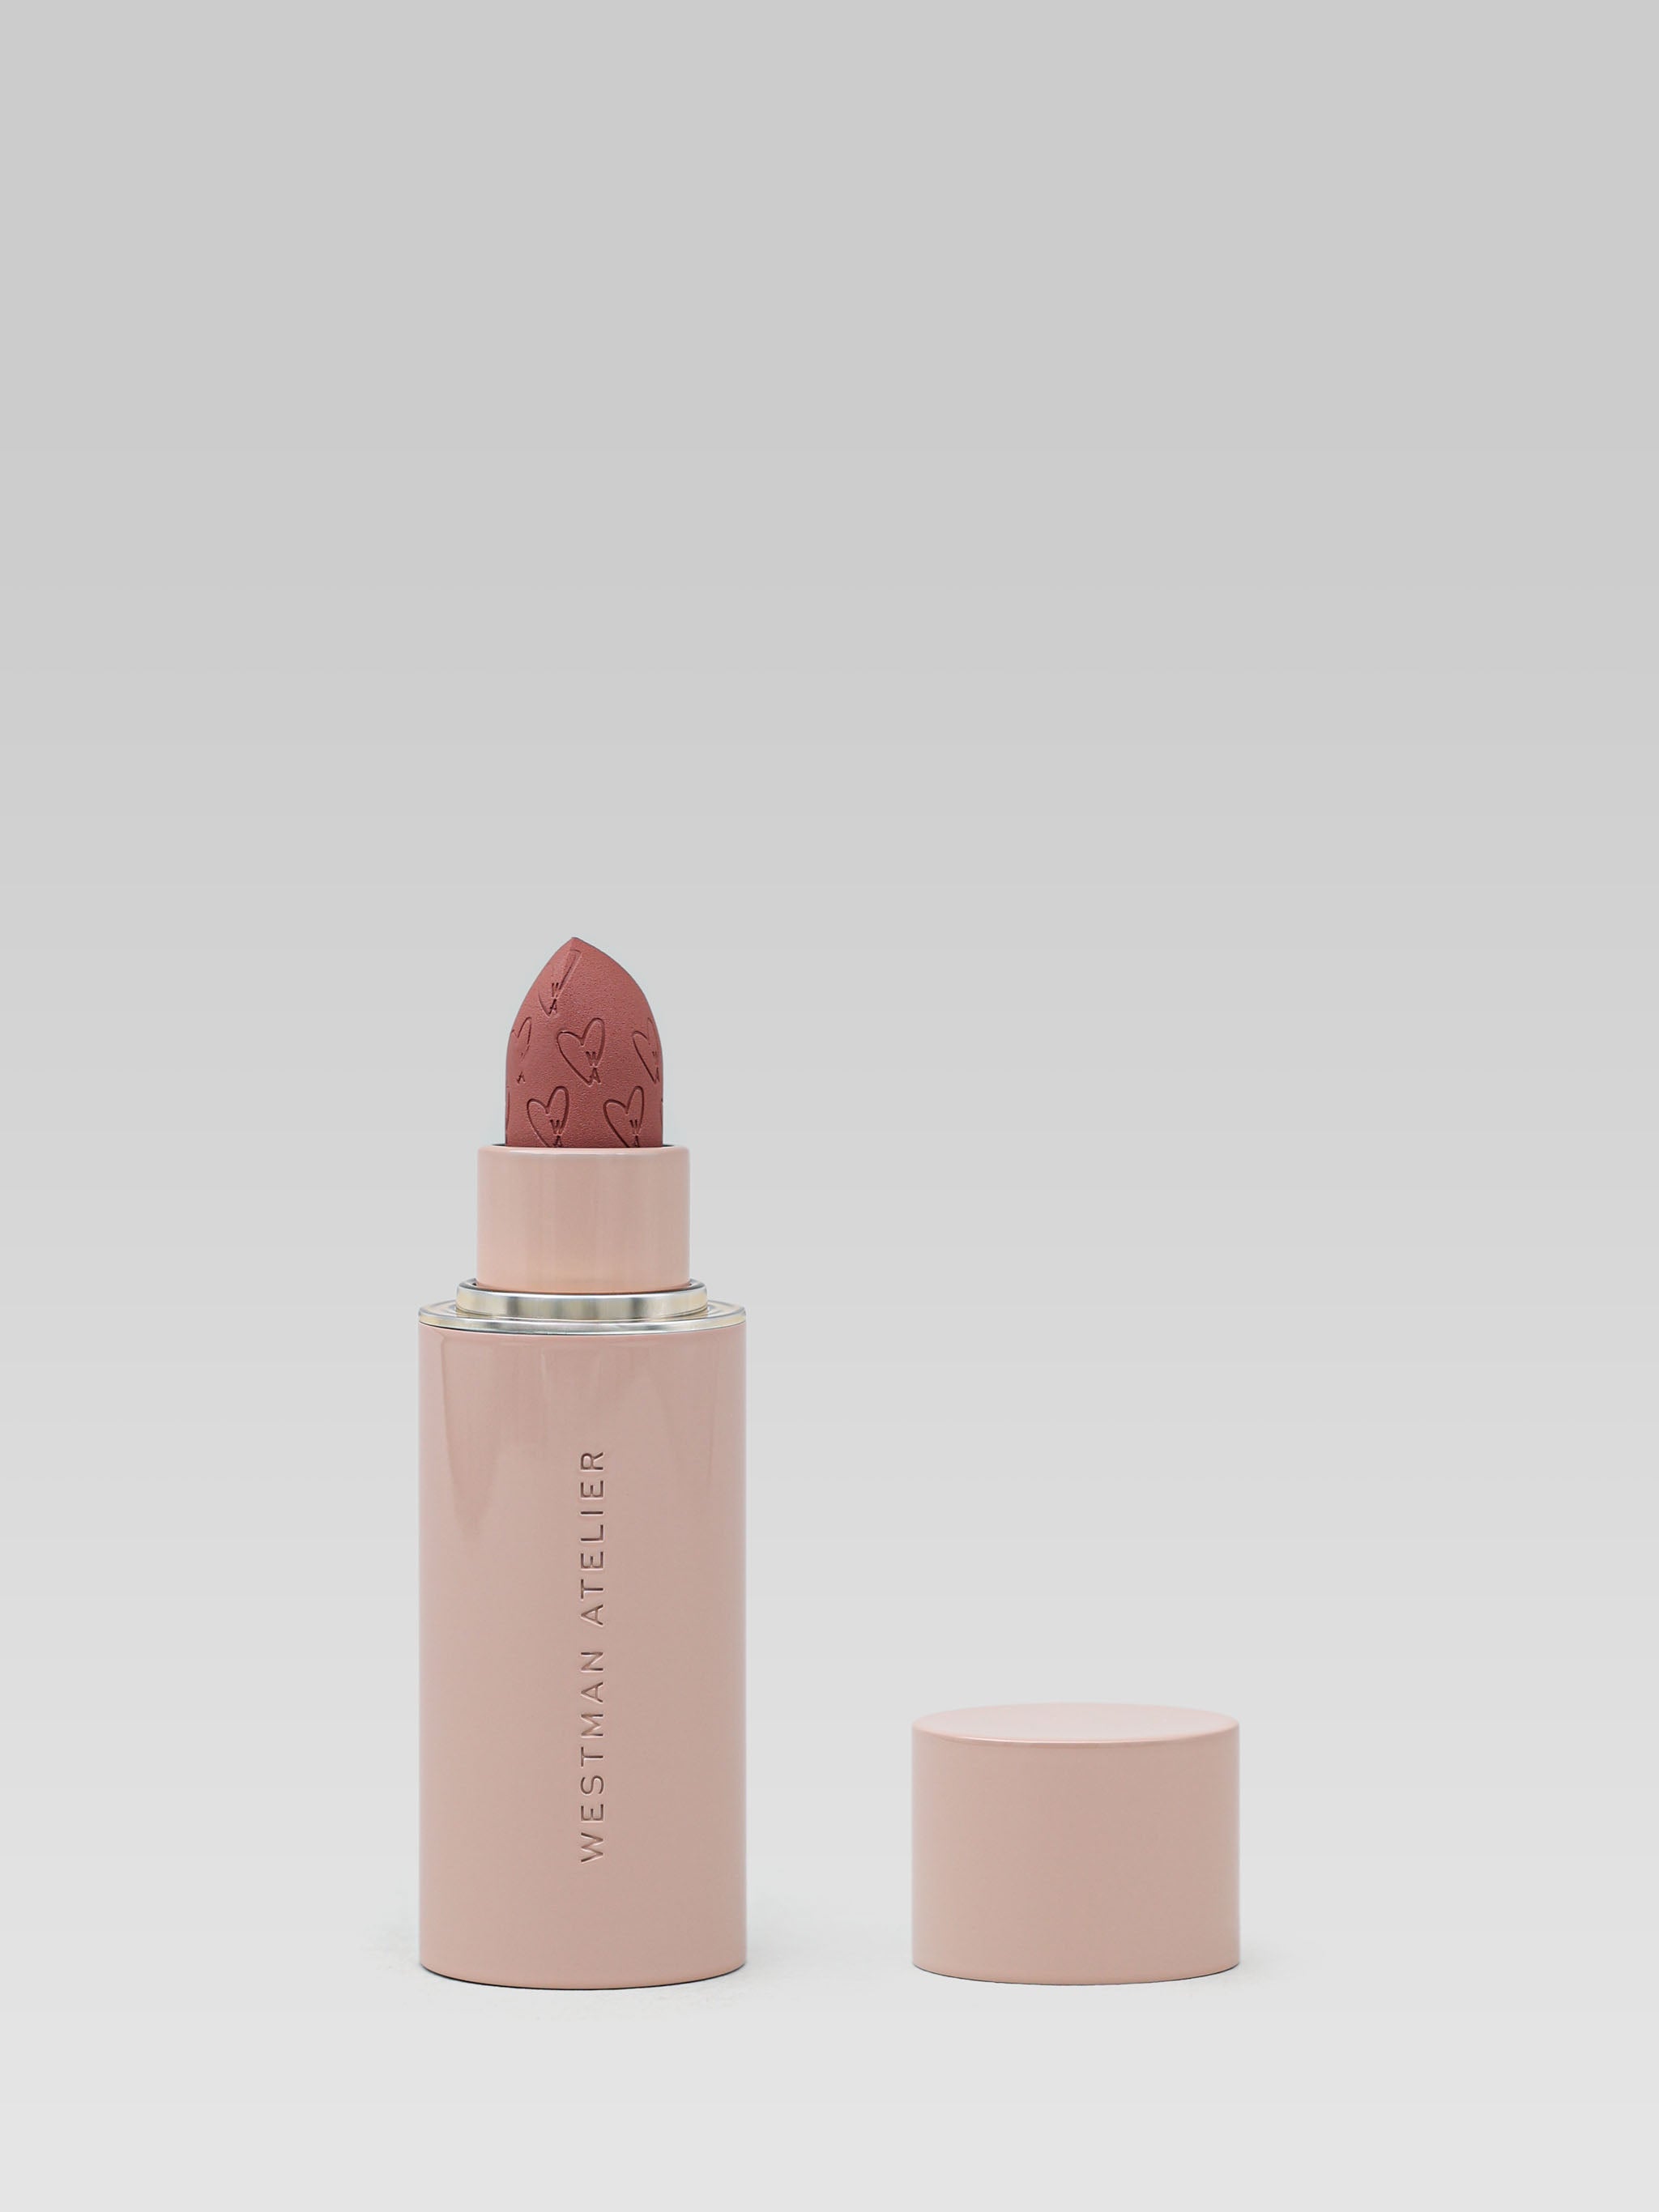 Westman Atelier Lip Suede Matte Lipstick in Piqué product shot